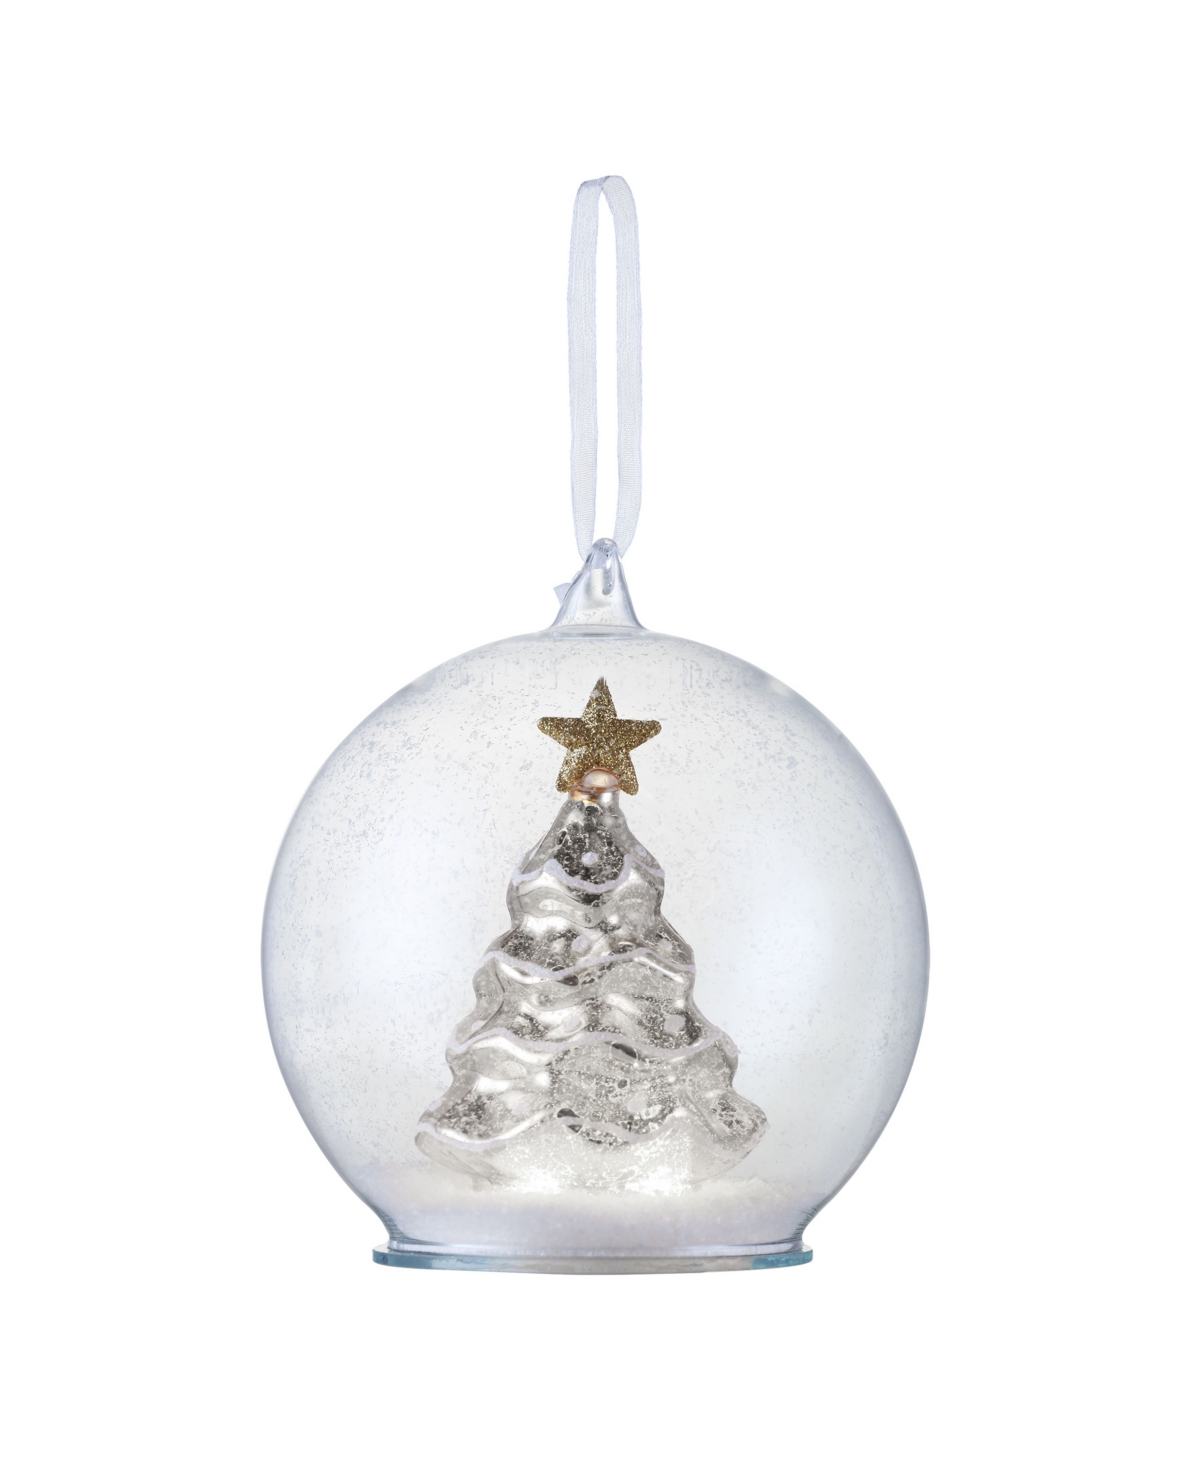 Mr. Christmas 5.5" Mercury Glass Tree Globe Ornament In Silver